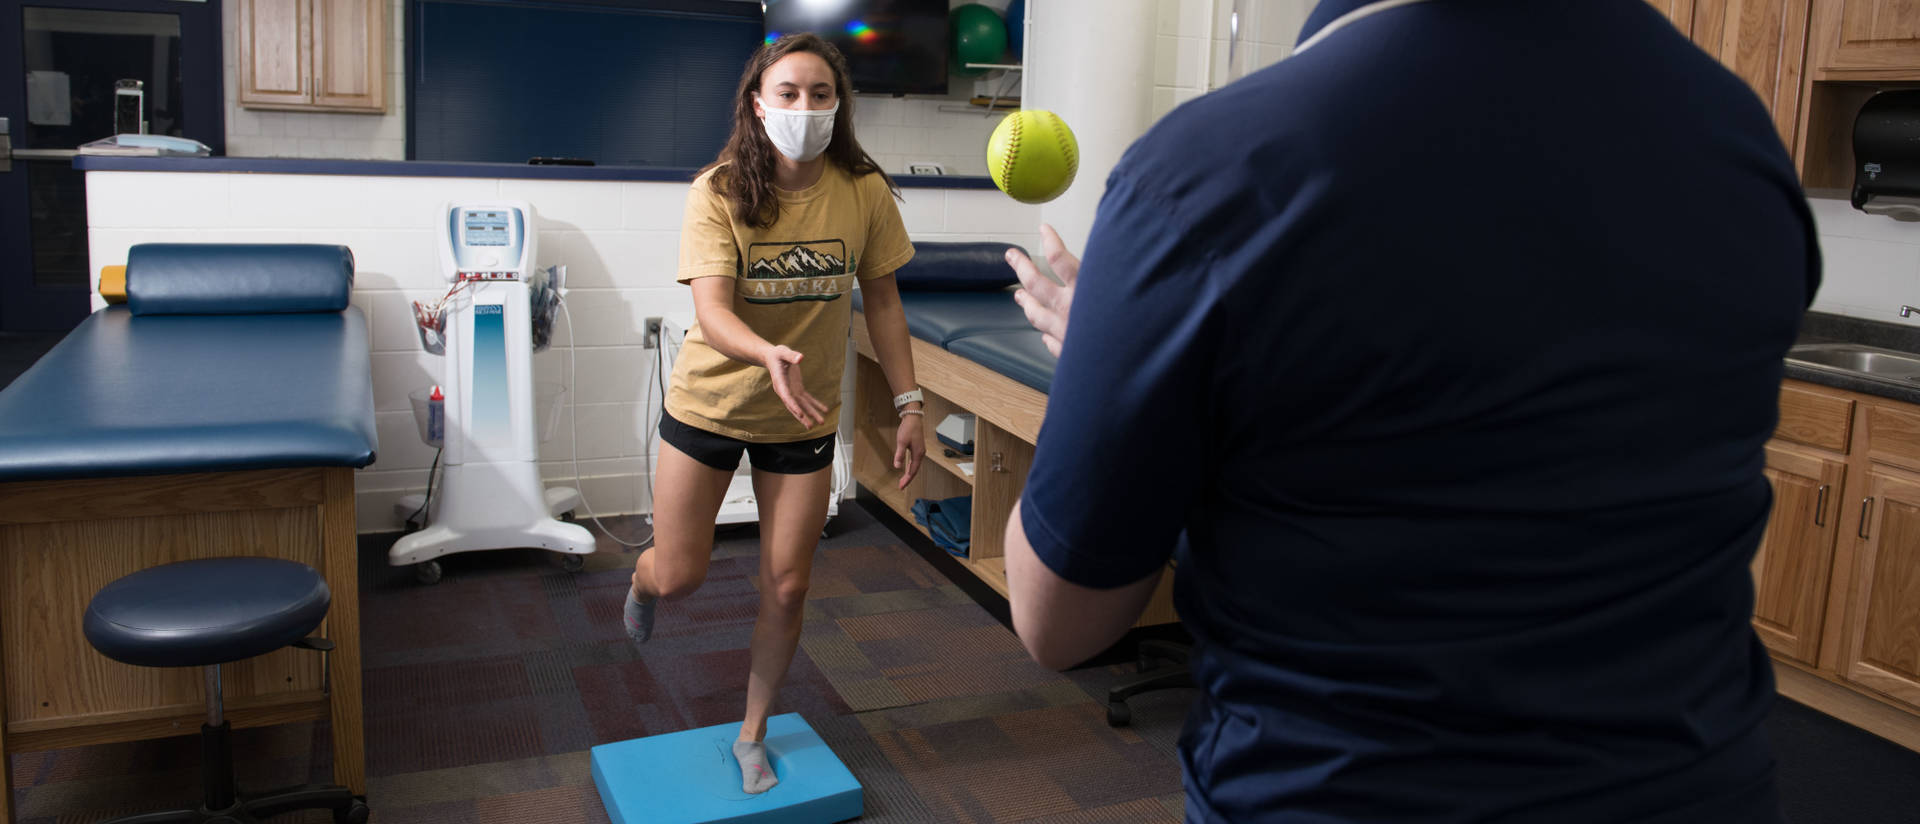 Athletic training students practicing rehabilitation techniques